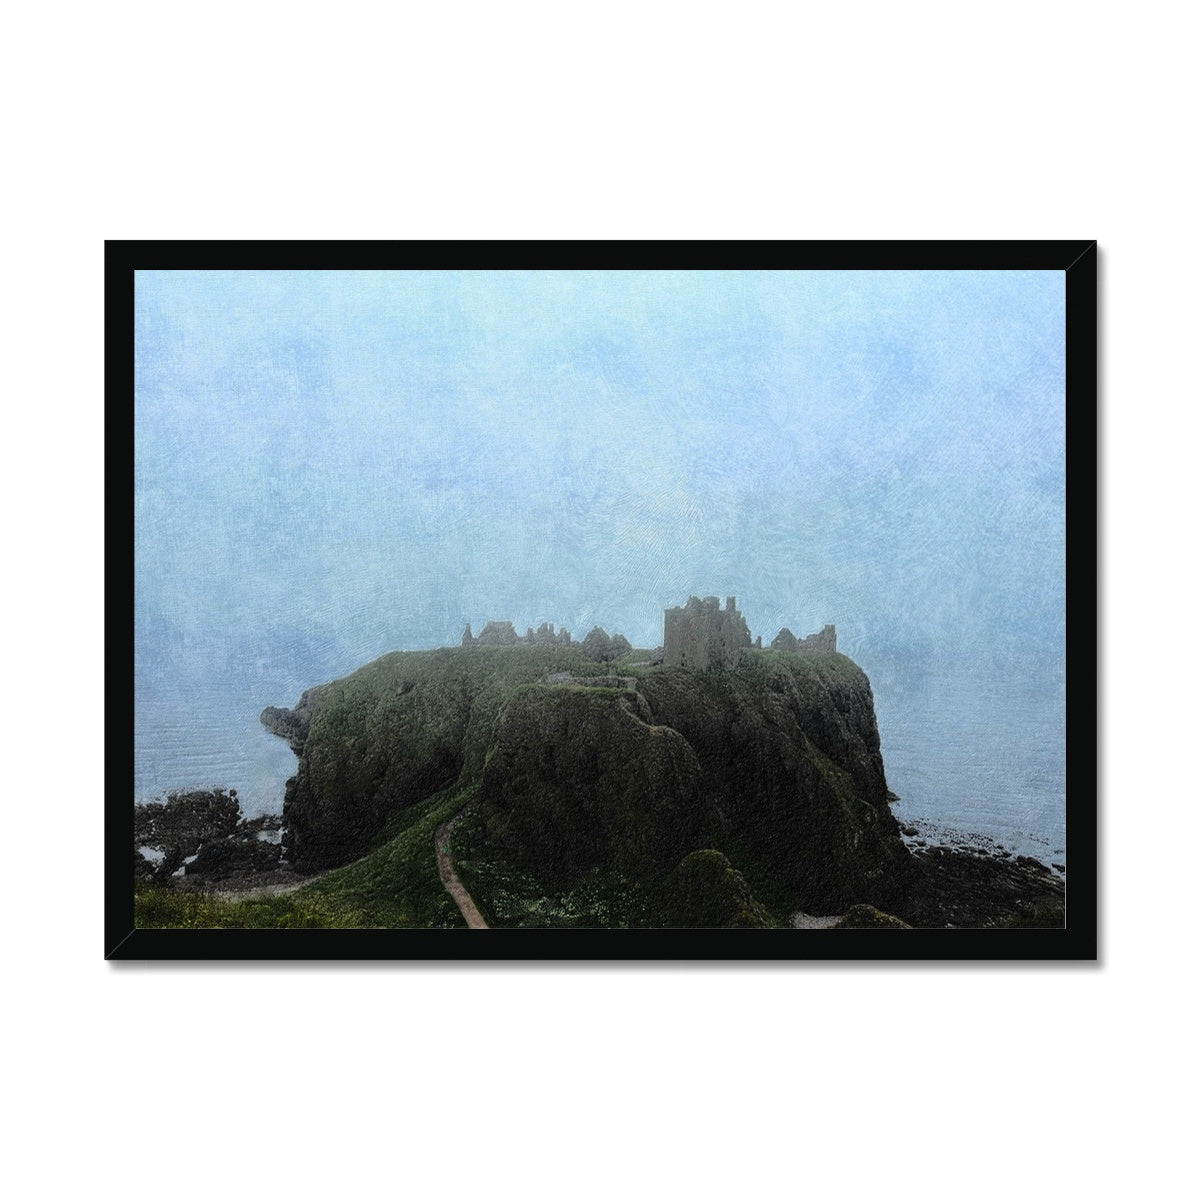 Dunnottar Castle Mist Painting | Framed Prints From Scotland-Framed Prints-Historic & Iconic Scotland Art Gallery-A2 Landscape-Black Frame-Paintings, Prints, Homeware, Art Gifts From Scotland By Scottish Artist Kevin Hunter